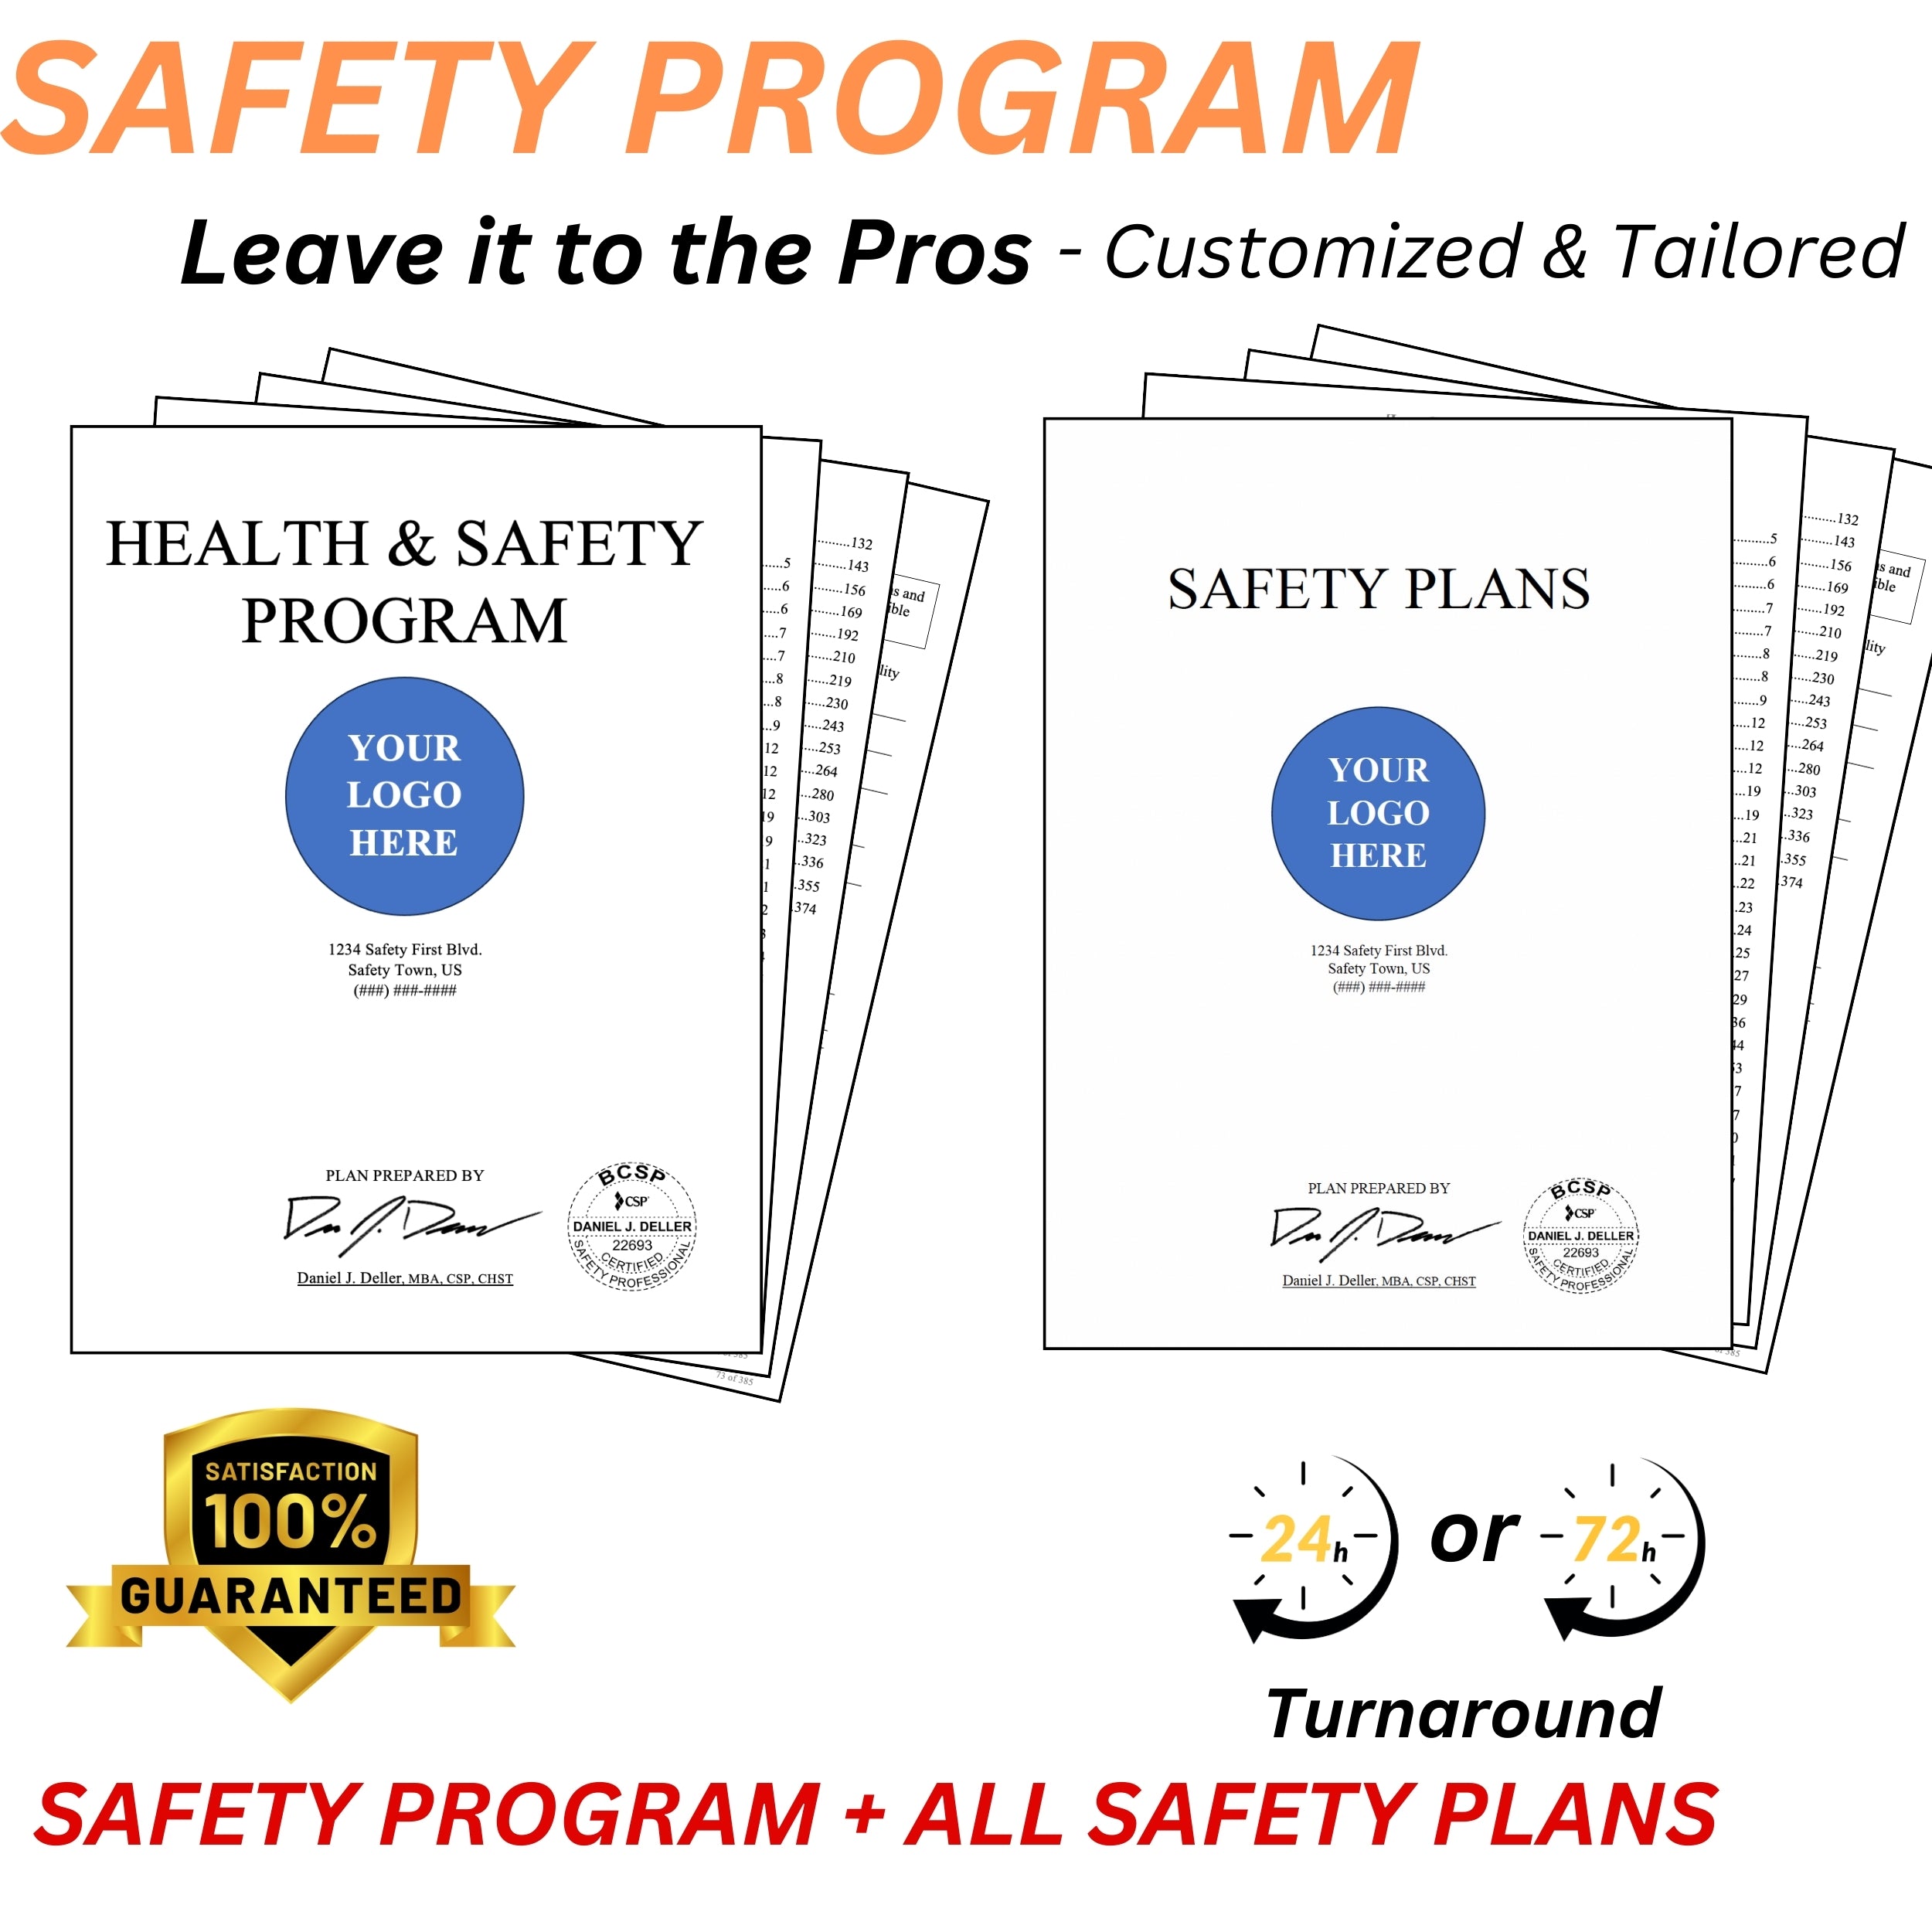 Upgrade Safety Program ONLY to Safety Program + All Safety Plans